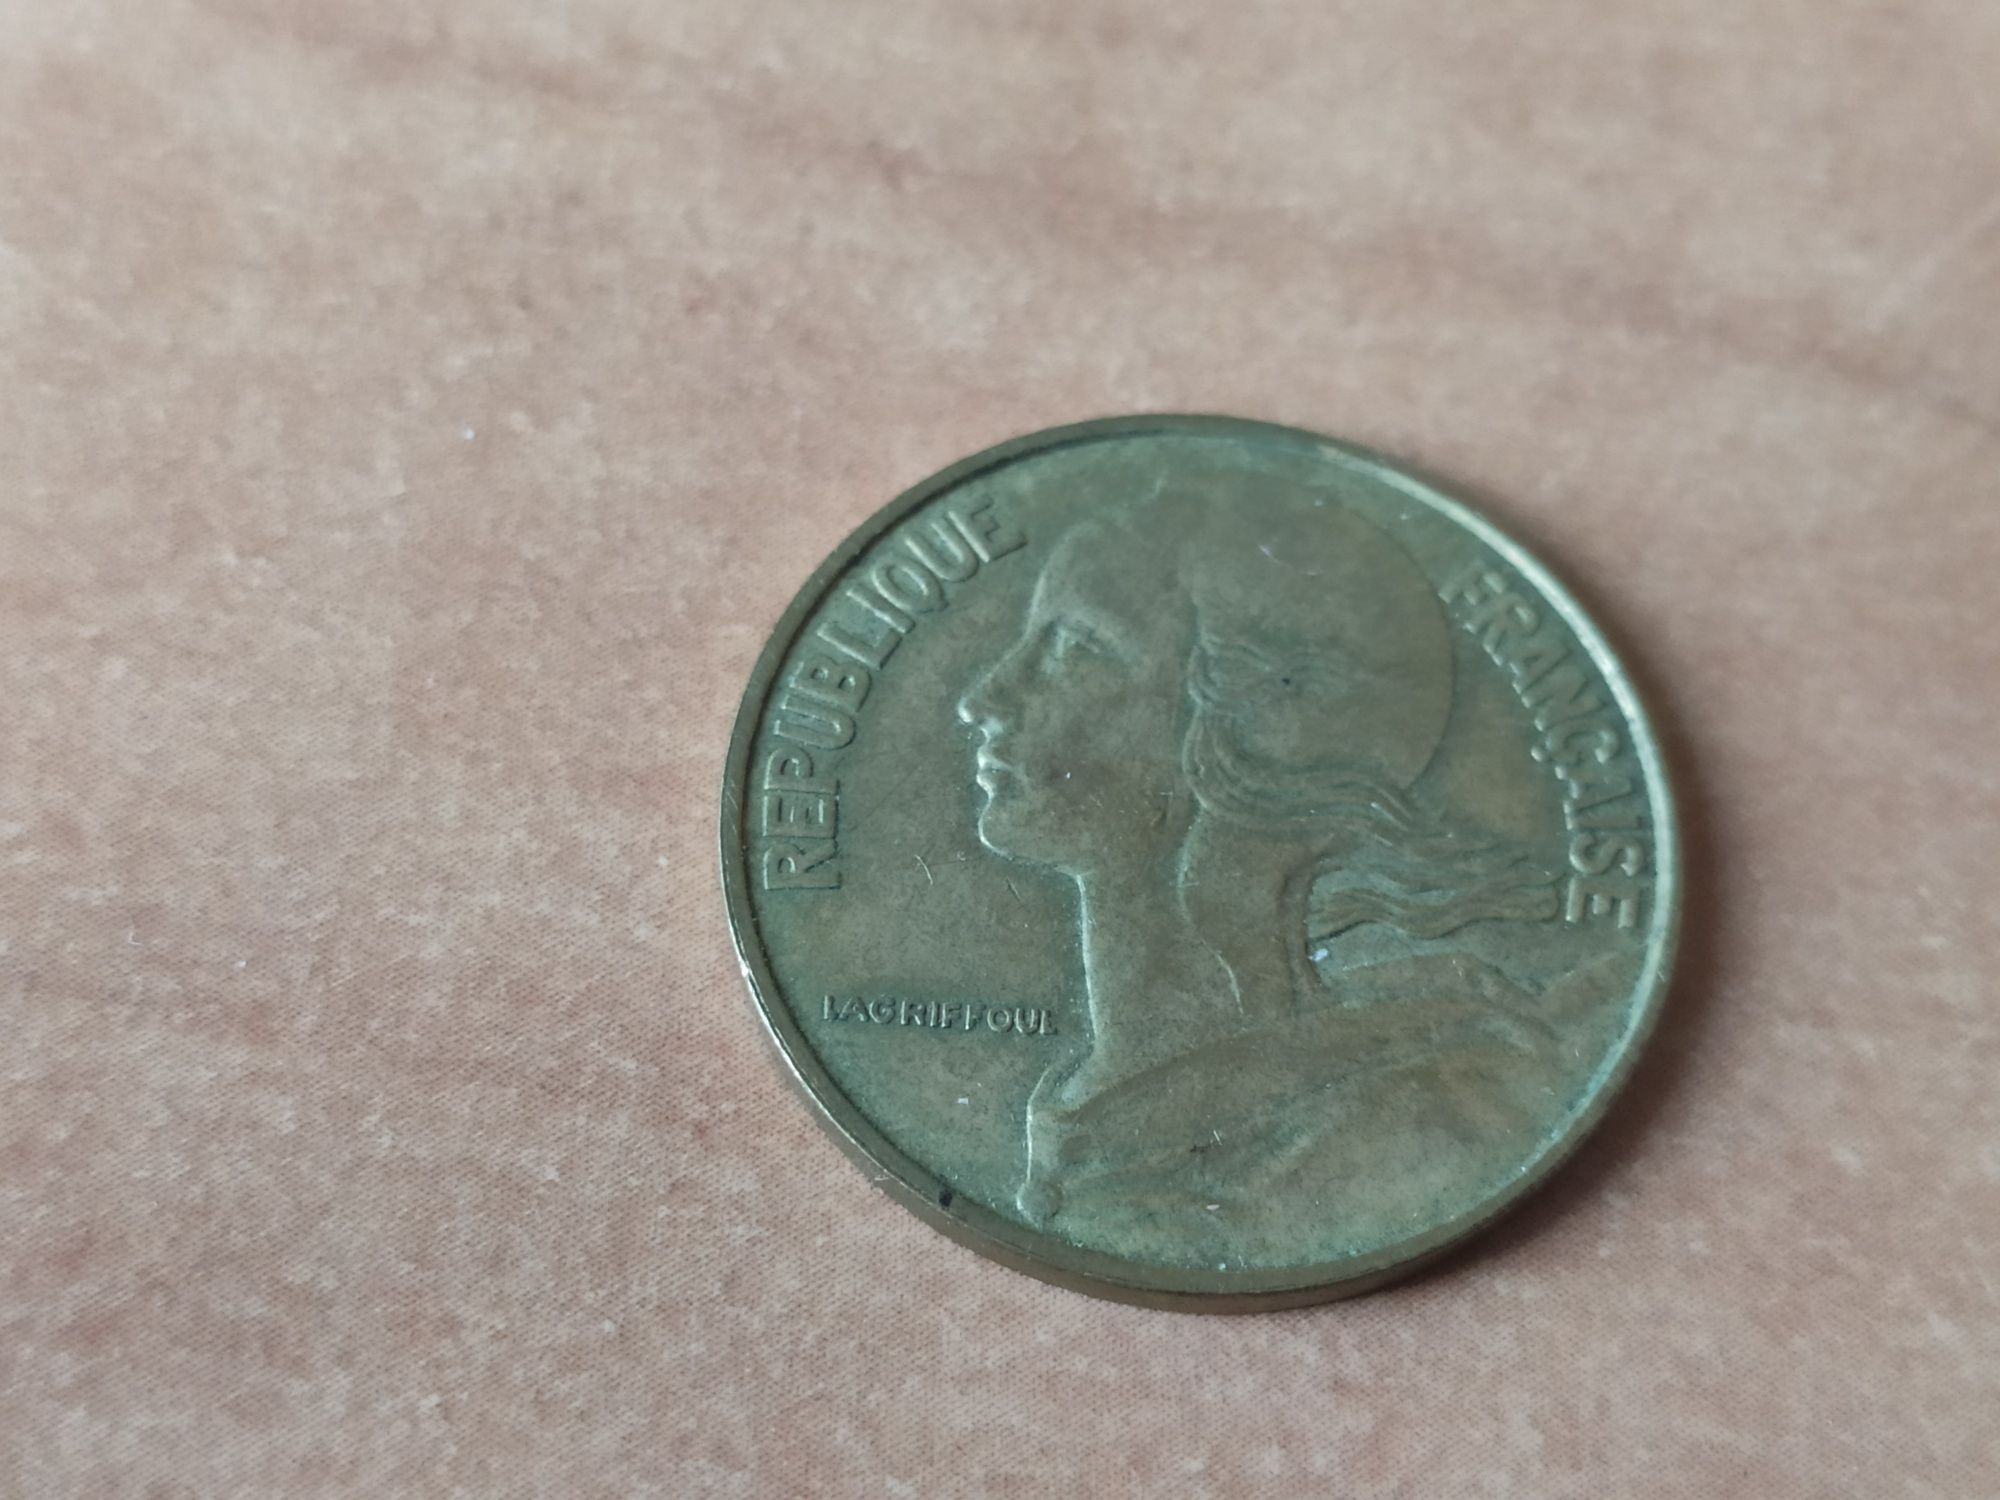 20 centimes Francja 1963 r. awers i rewers skręcone o 180 stopni